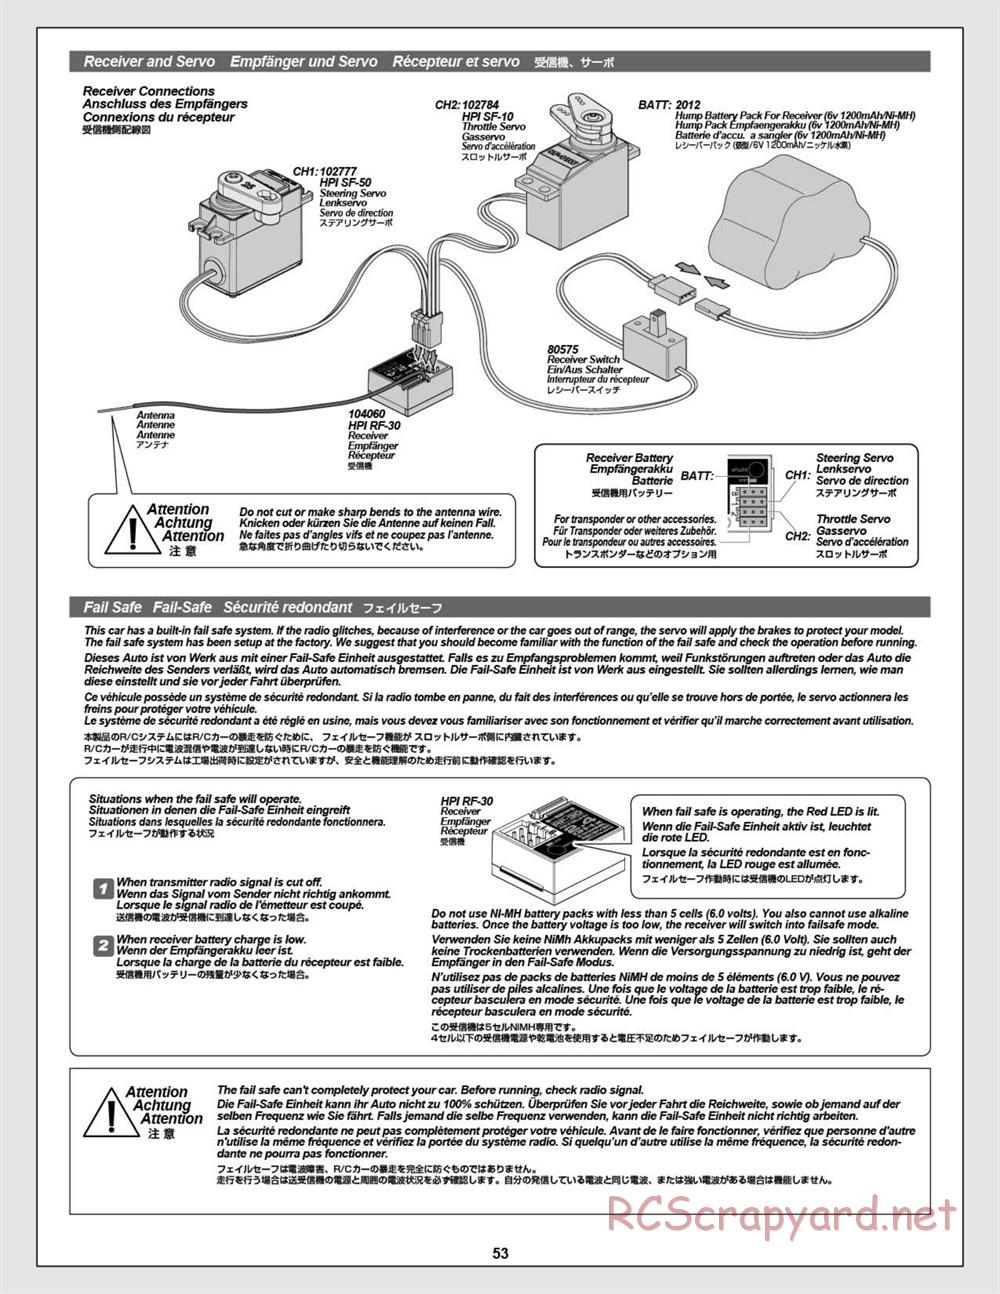 HPI - Savage XL Octane - Manual - Page 53